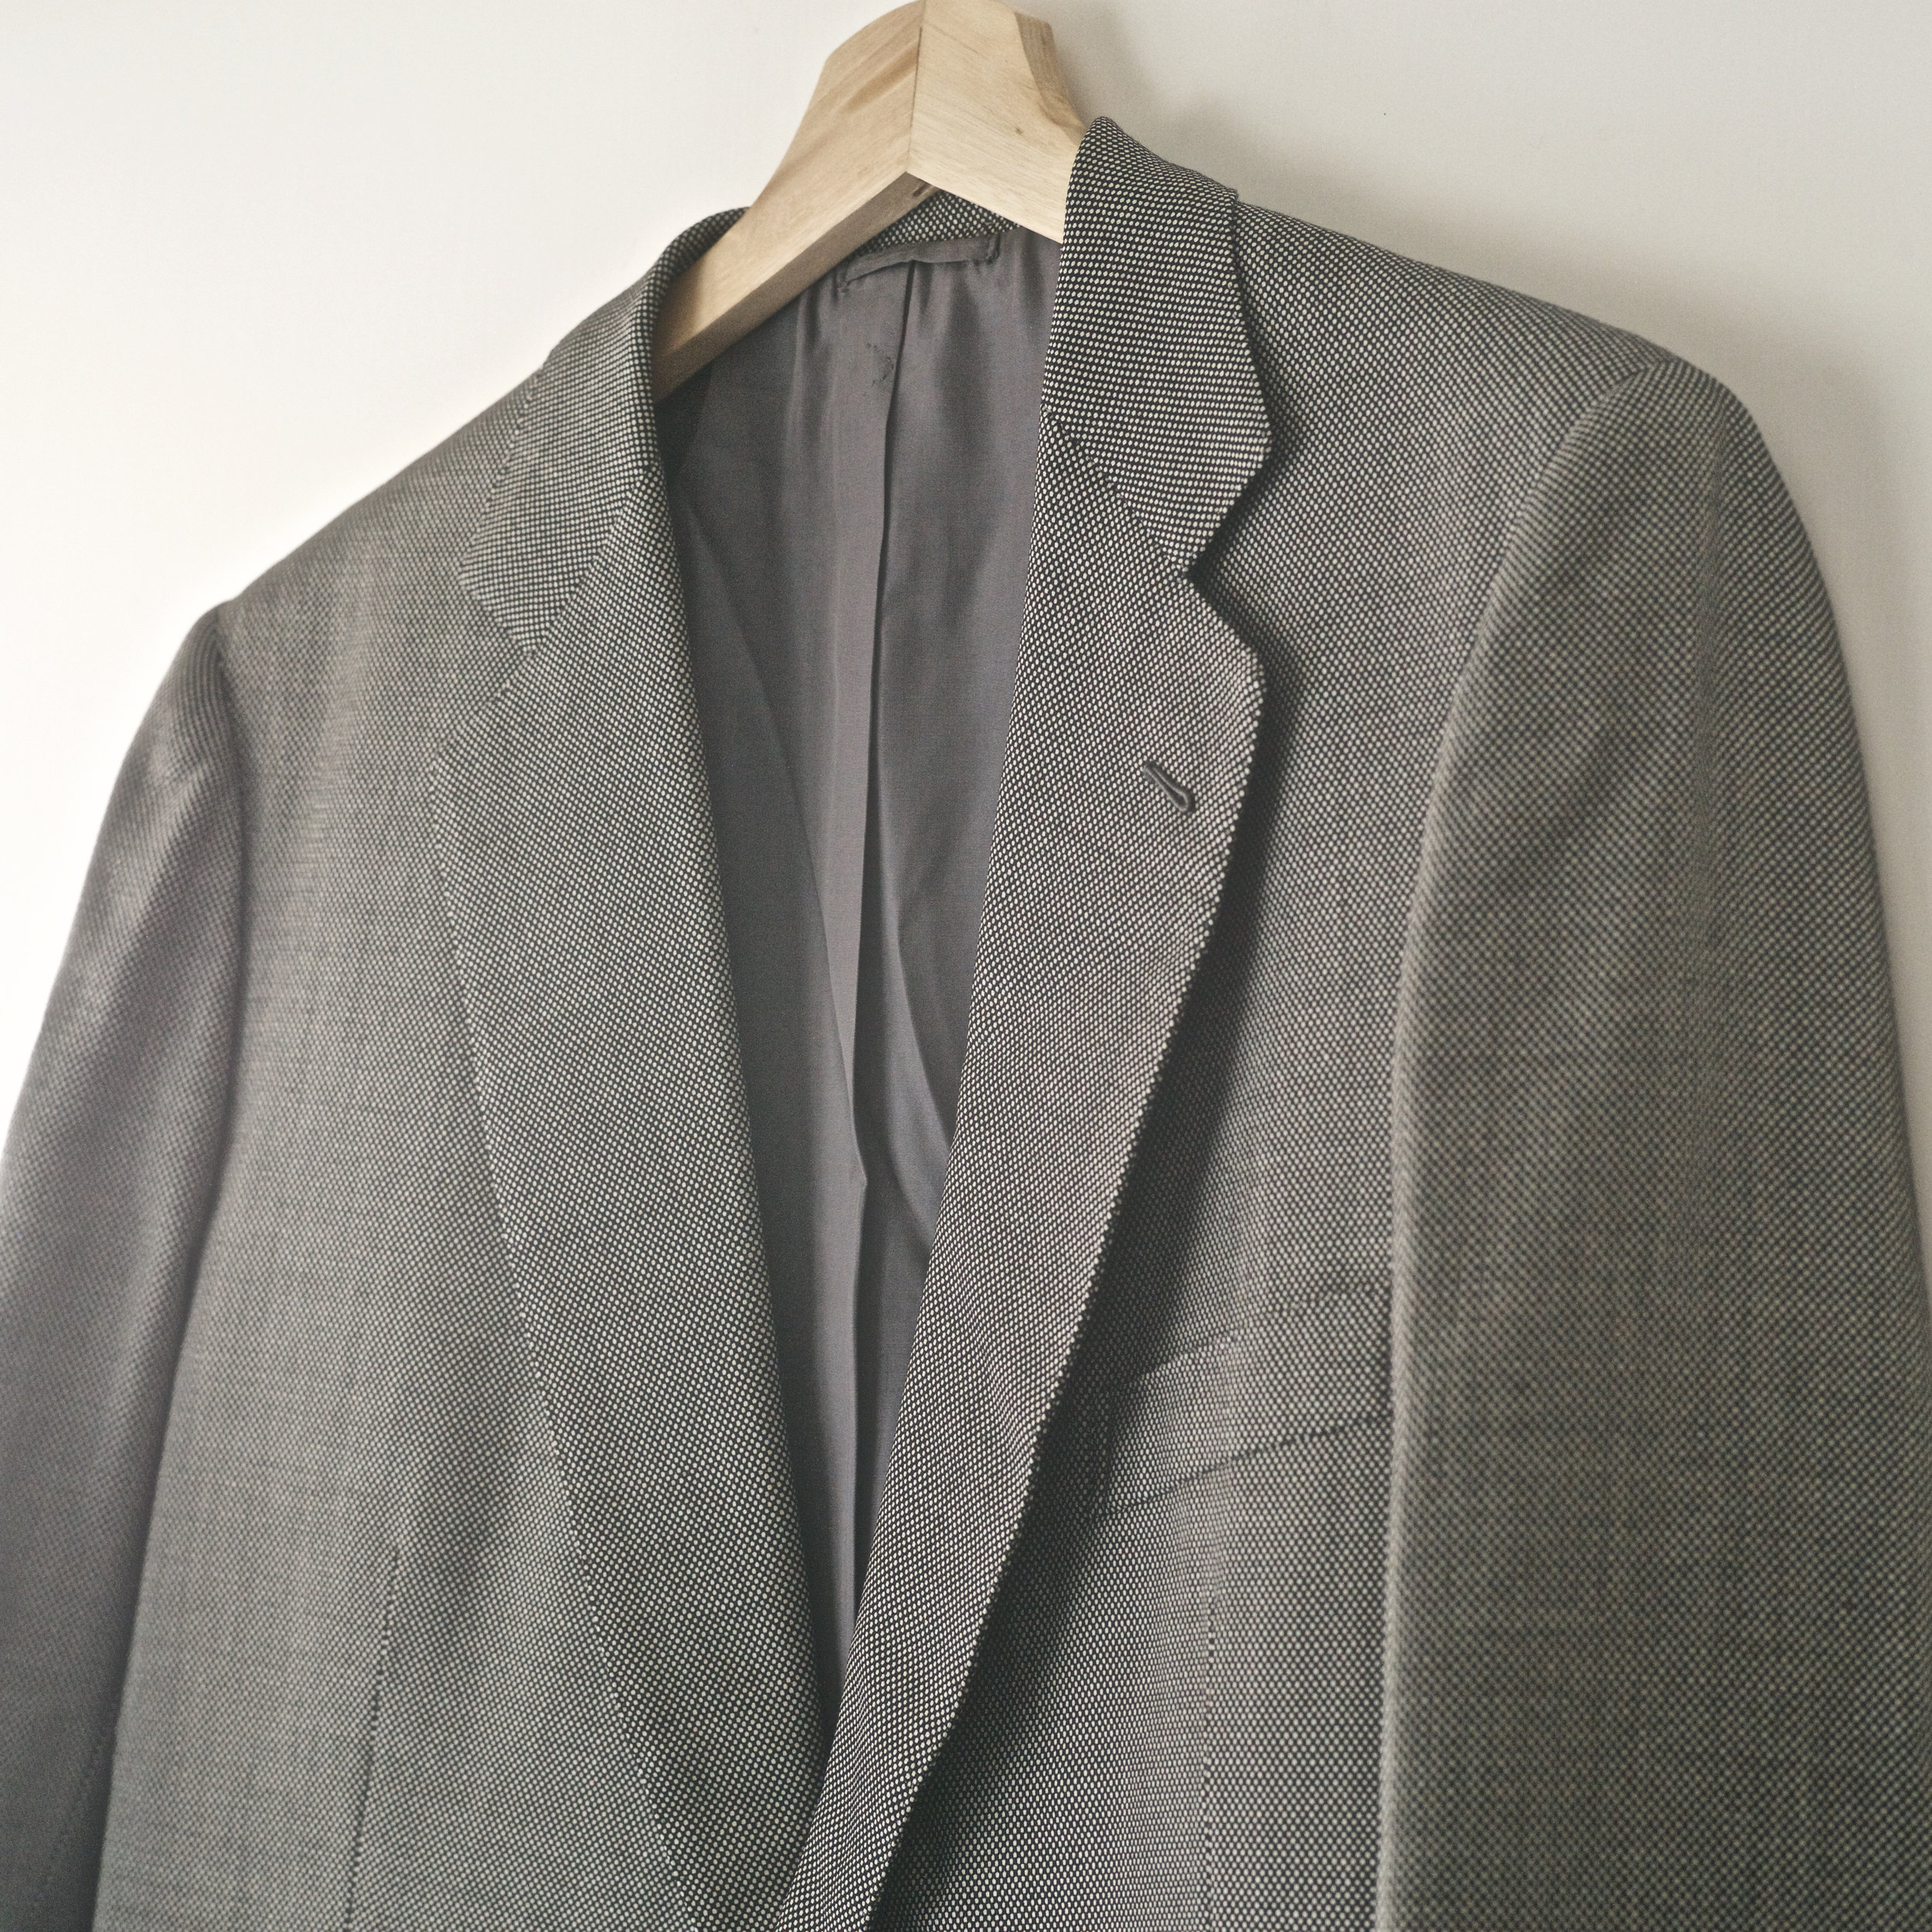 Cifonelli Bespoke Birdseye Suit — Combray